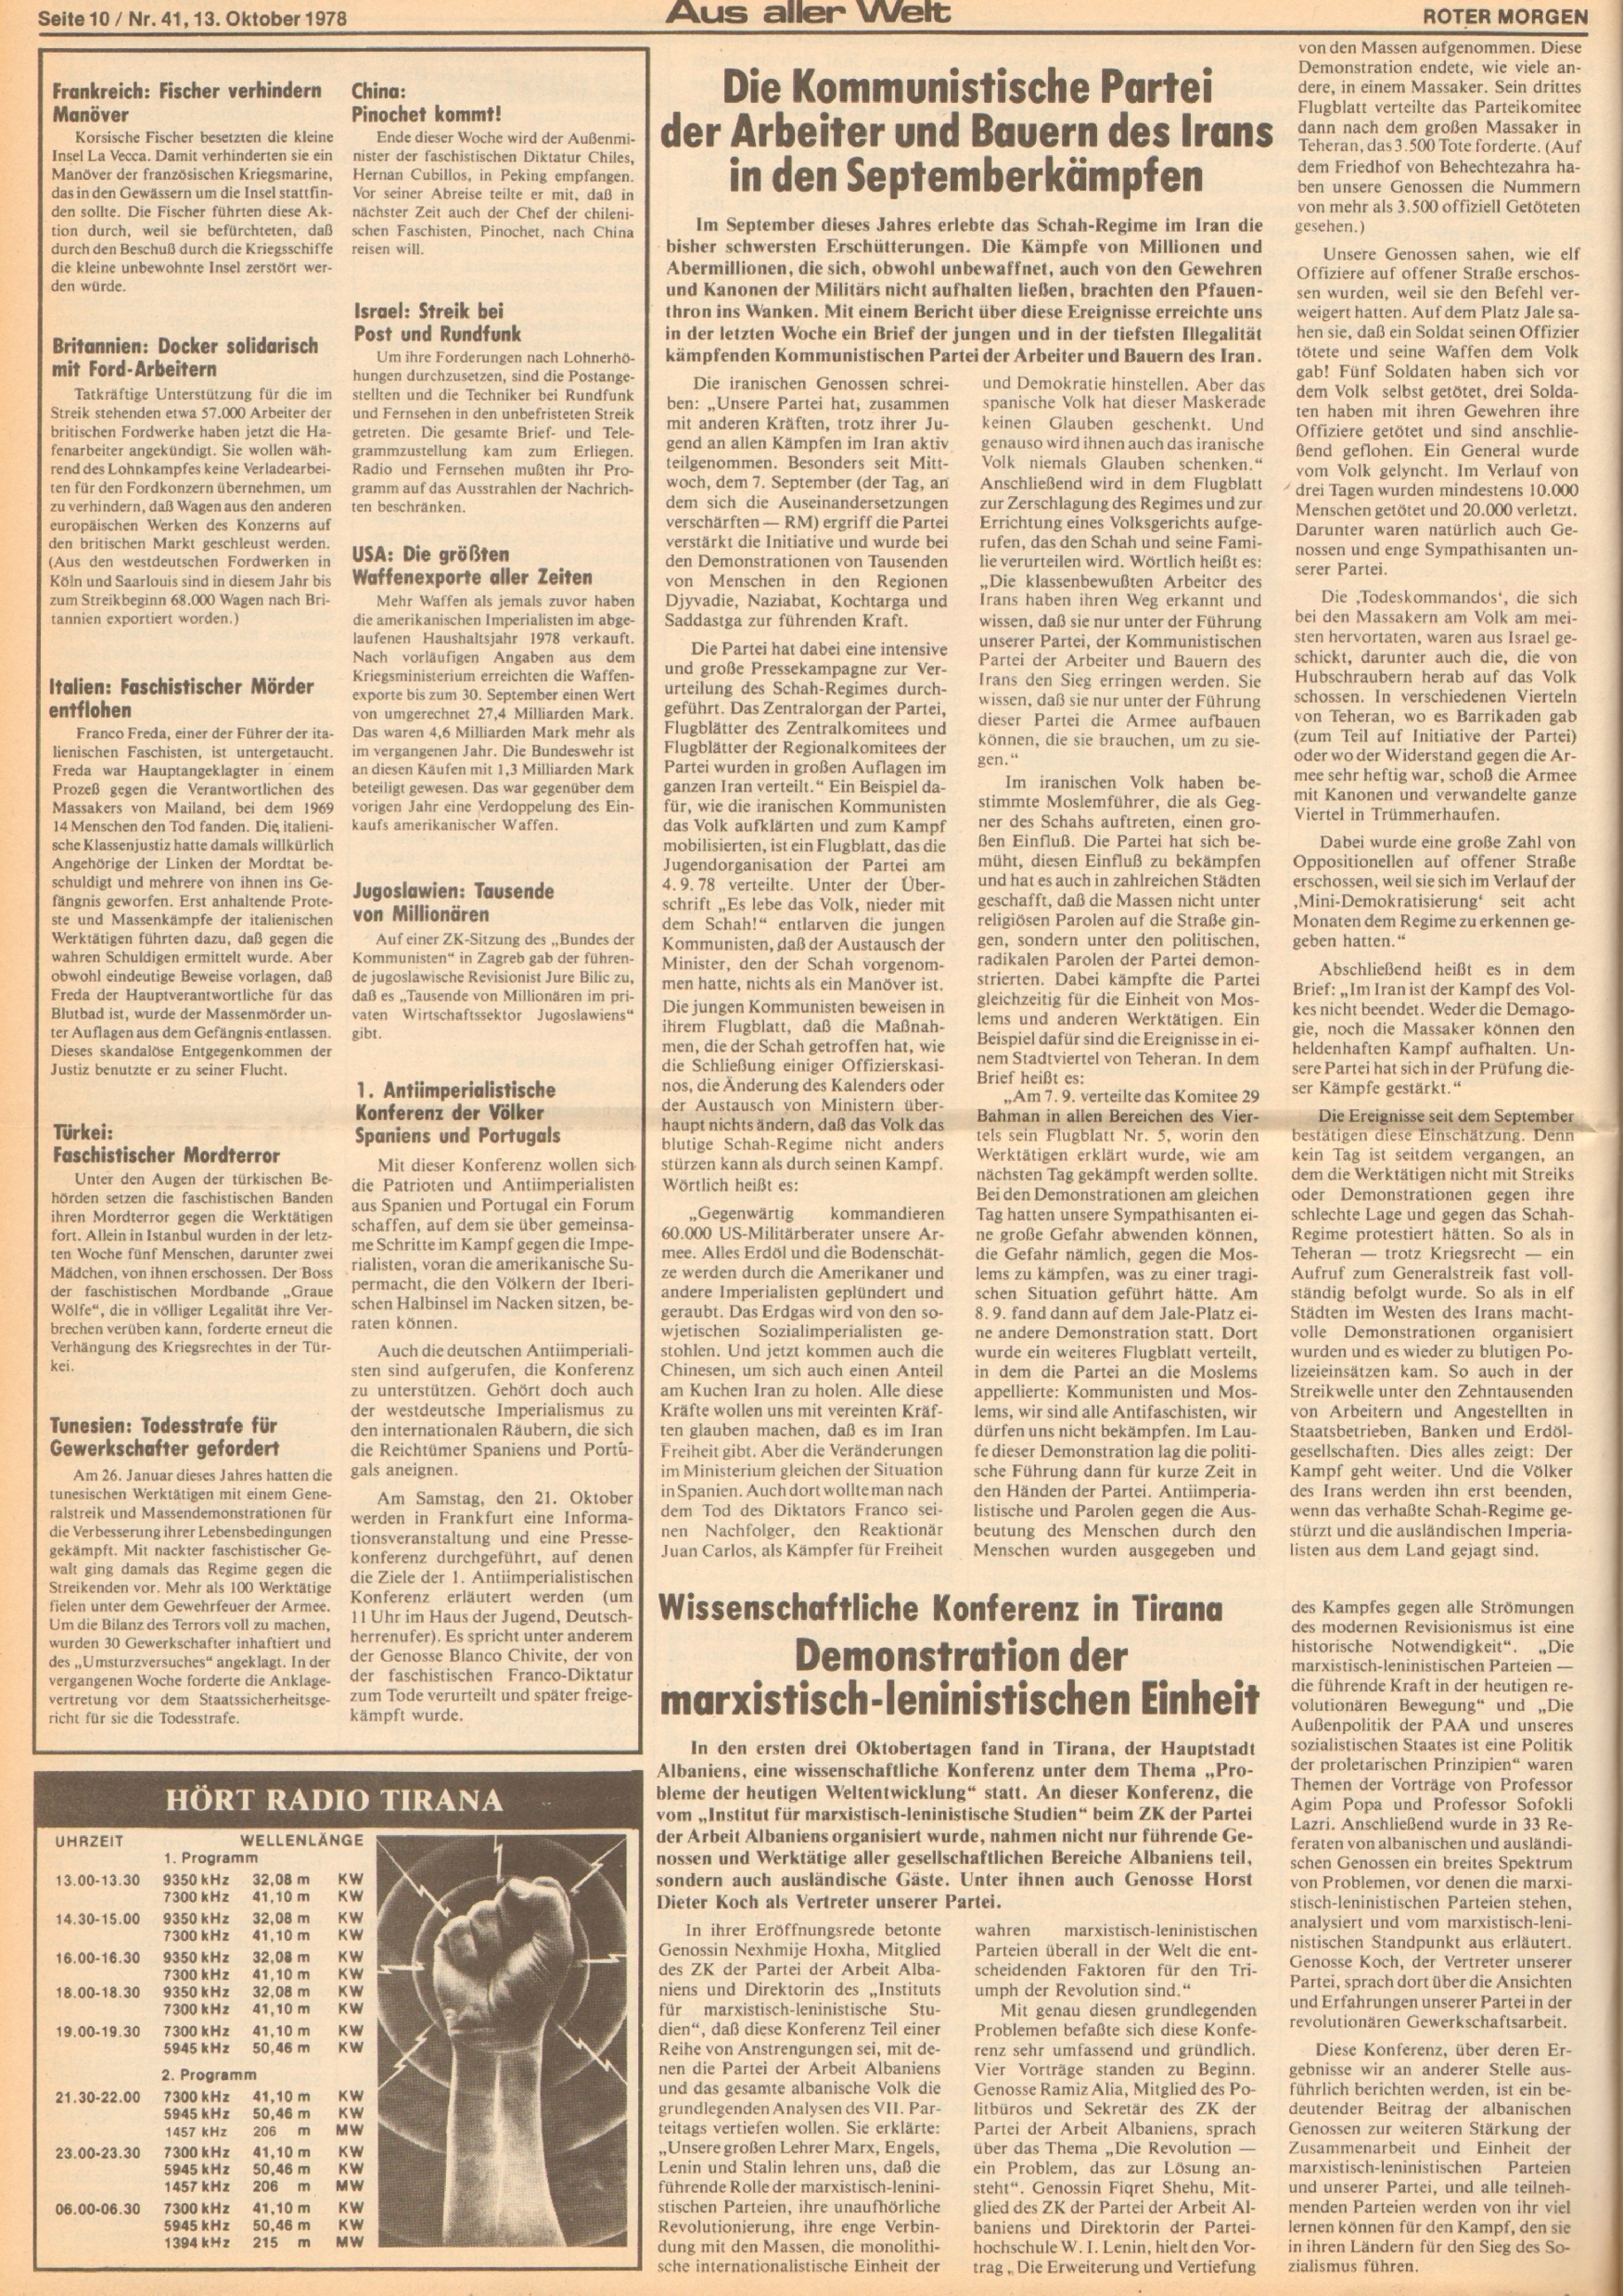 Roter Morgen, 12. Jg., 13. Oktober 1978, Nr. 41, Seite 10